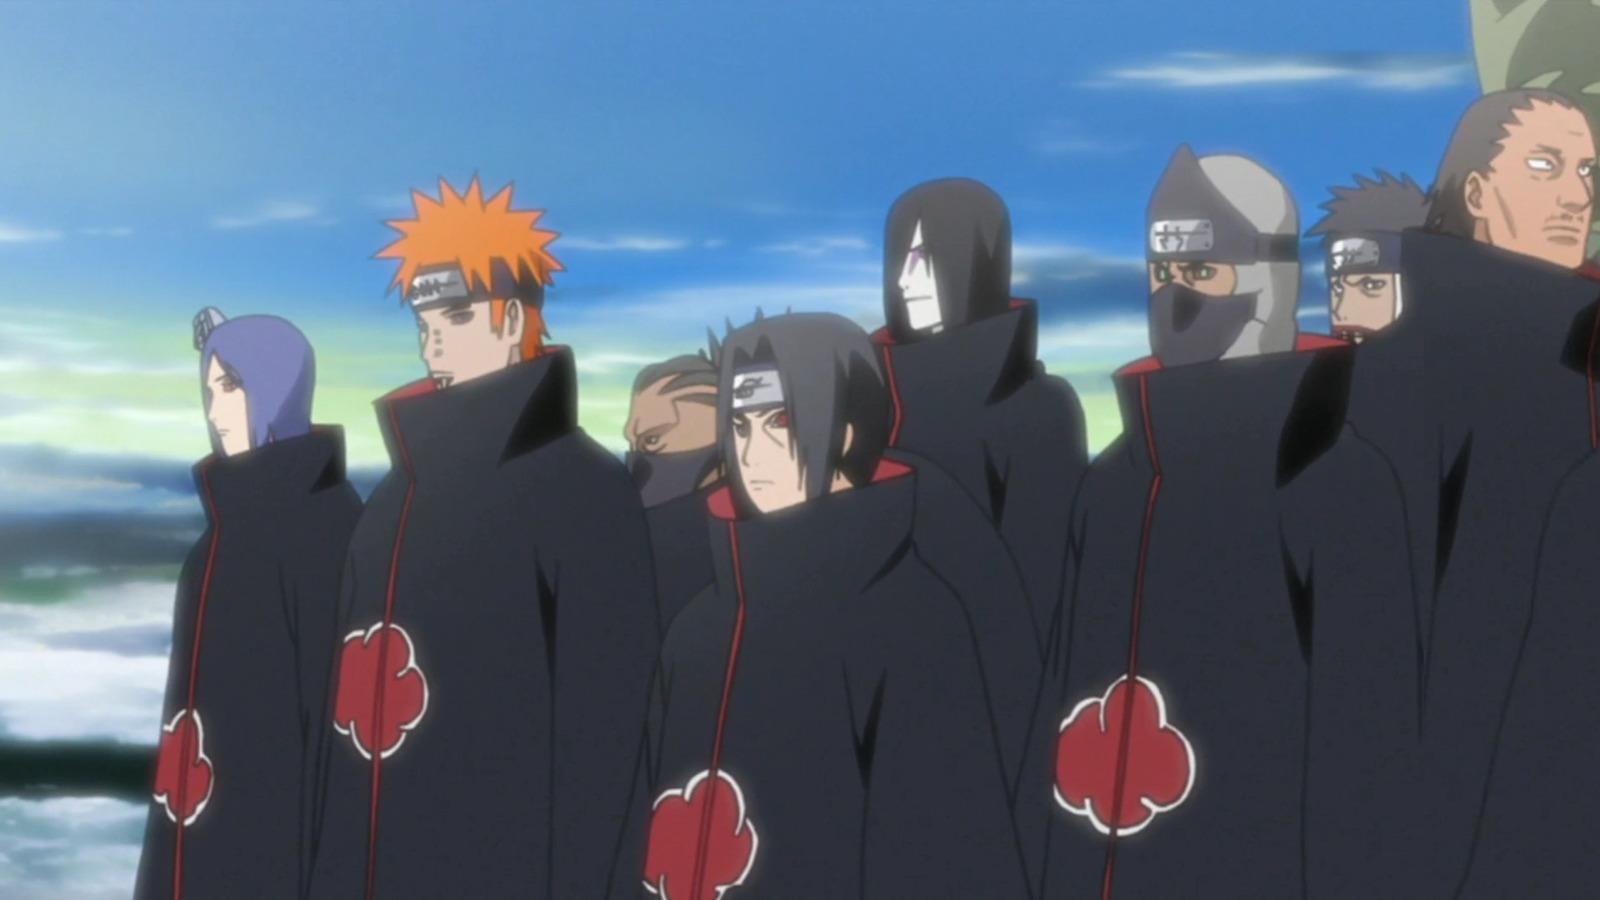 An image featuring major Akatsuki members in Naruto